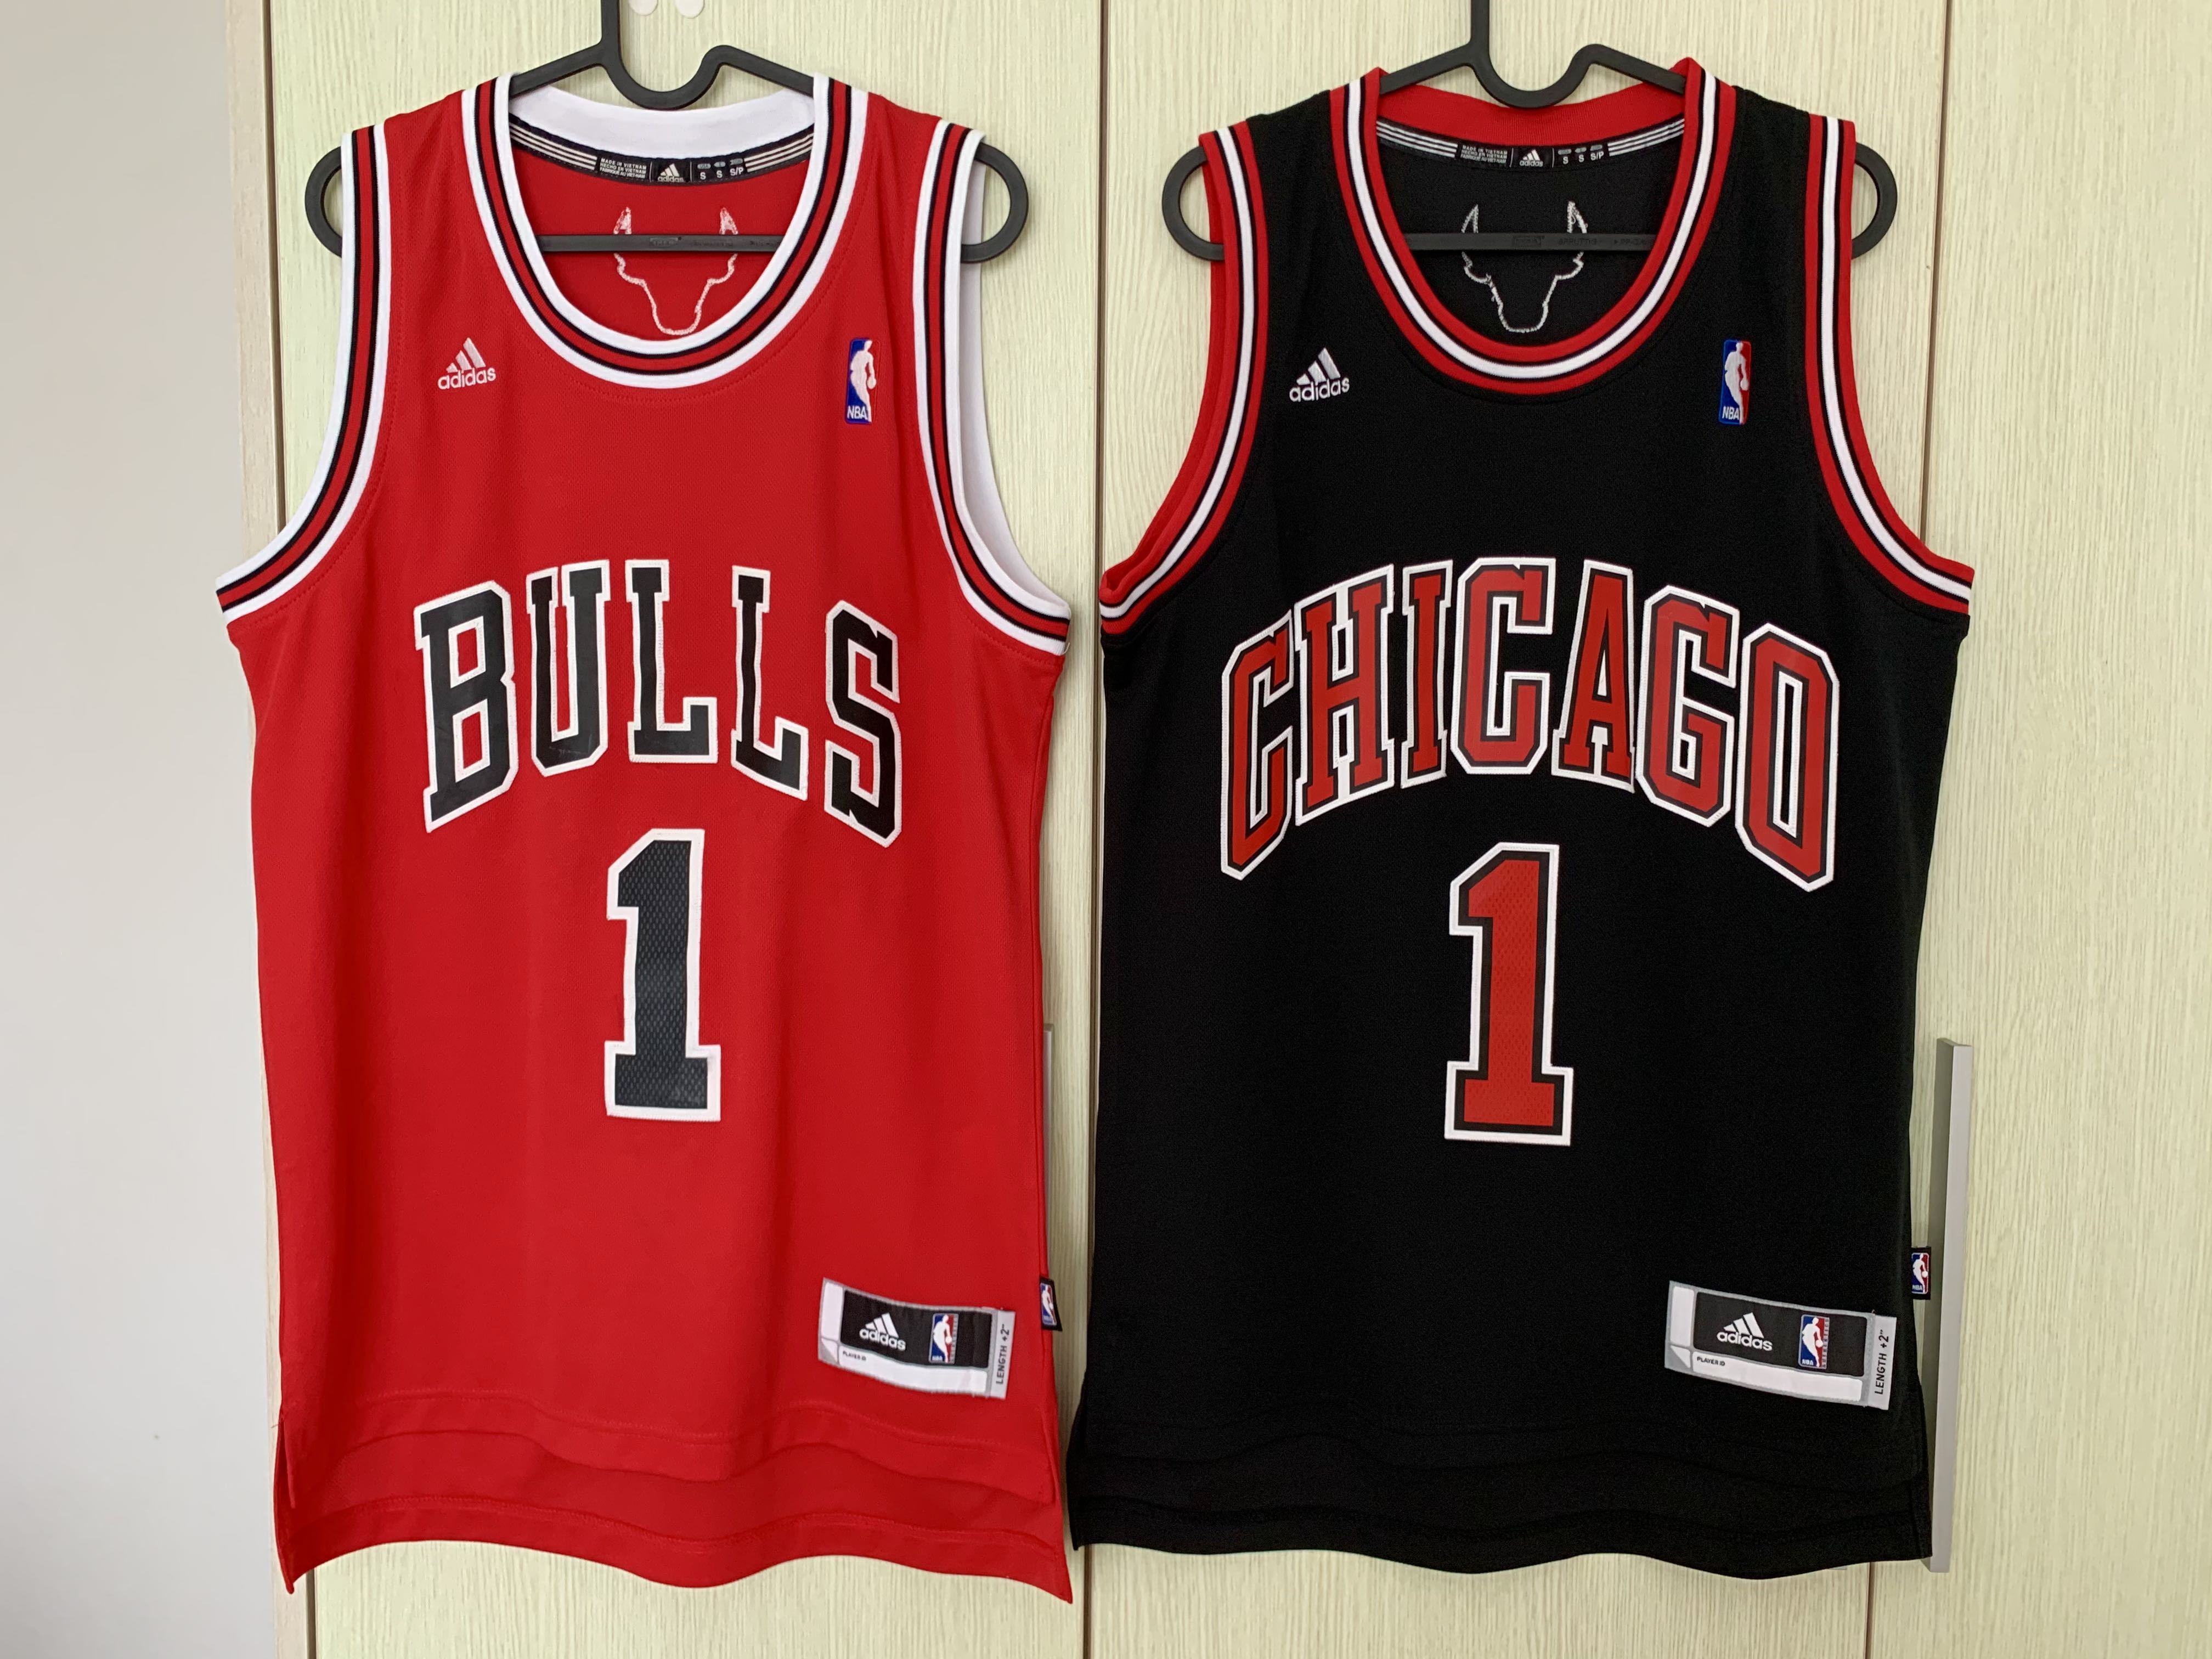 2012-13 Derrick Rose Bulls Jersey : r/nostalgia